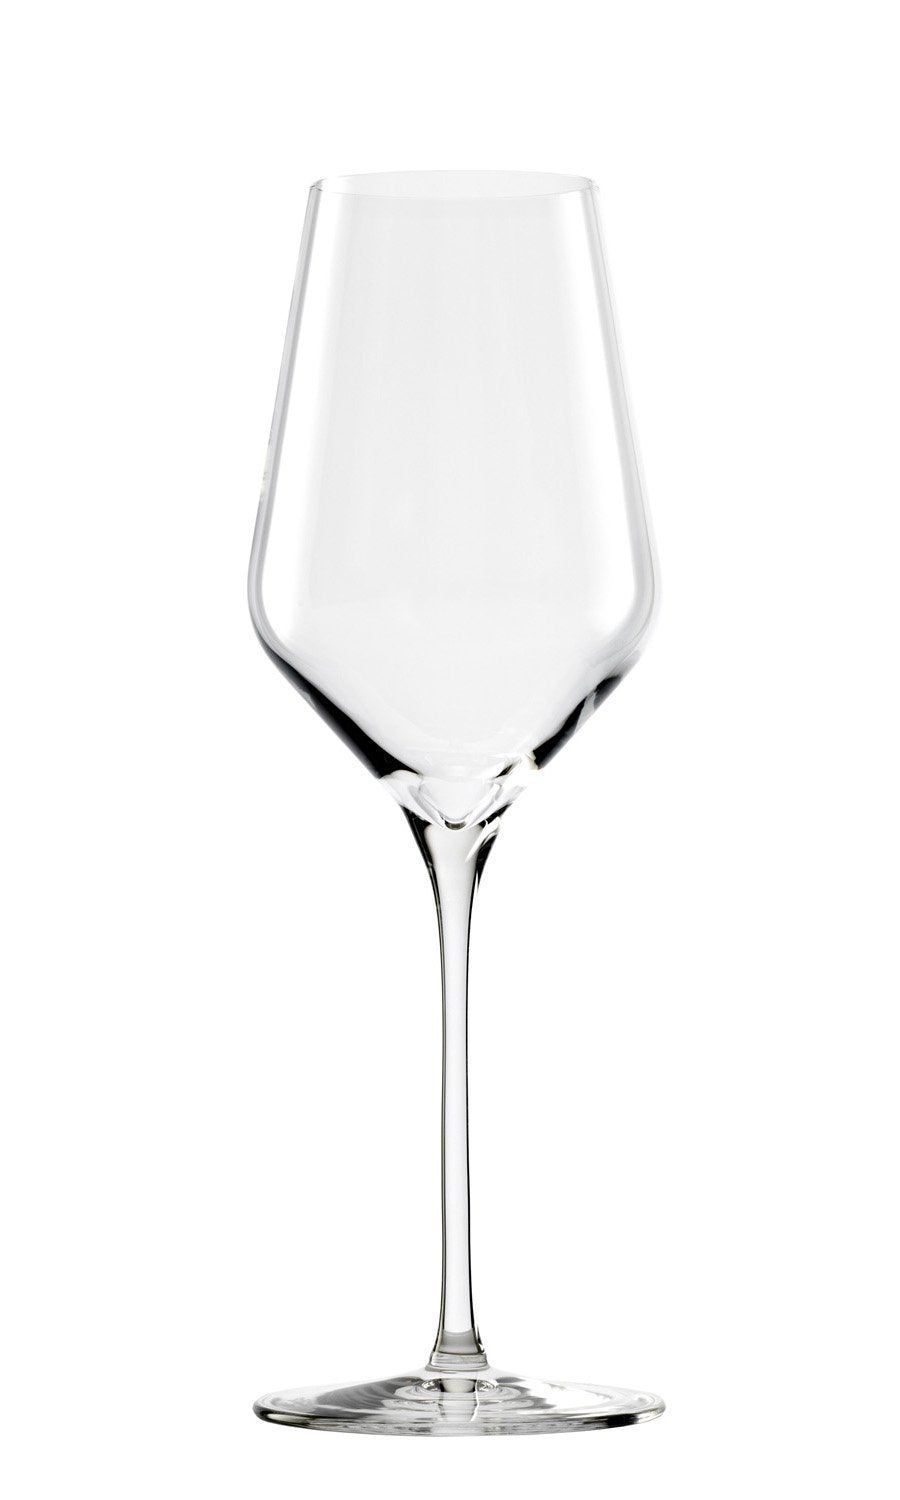 Stoelzle Quatrophil White Wine Glass Lead Free Crystal